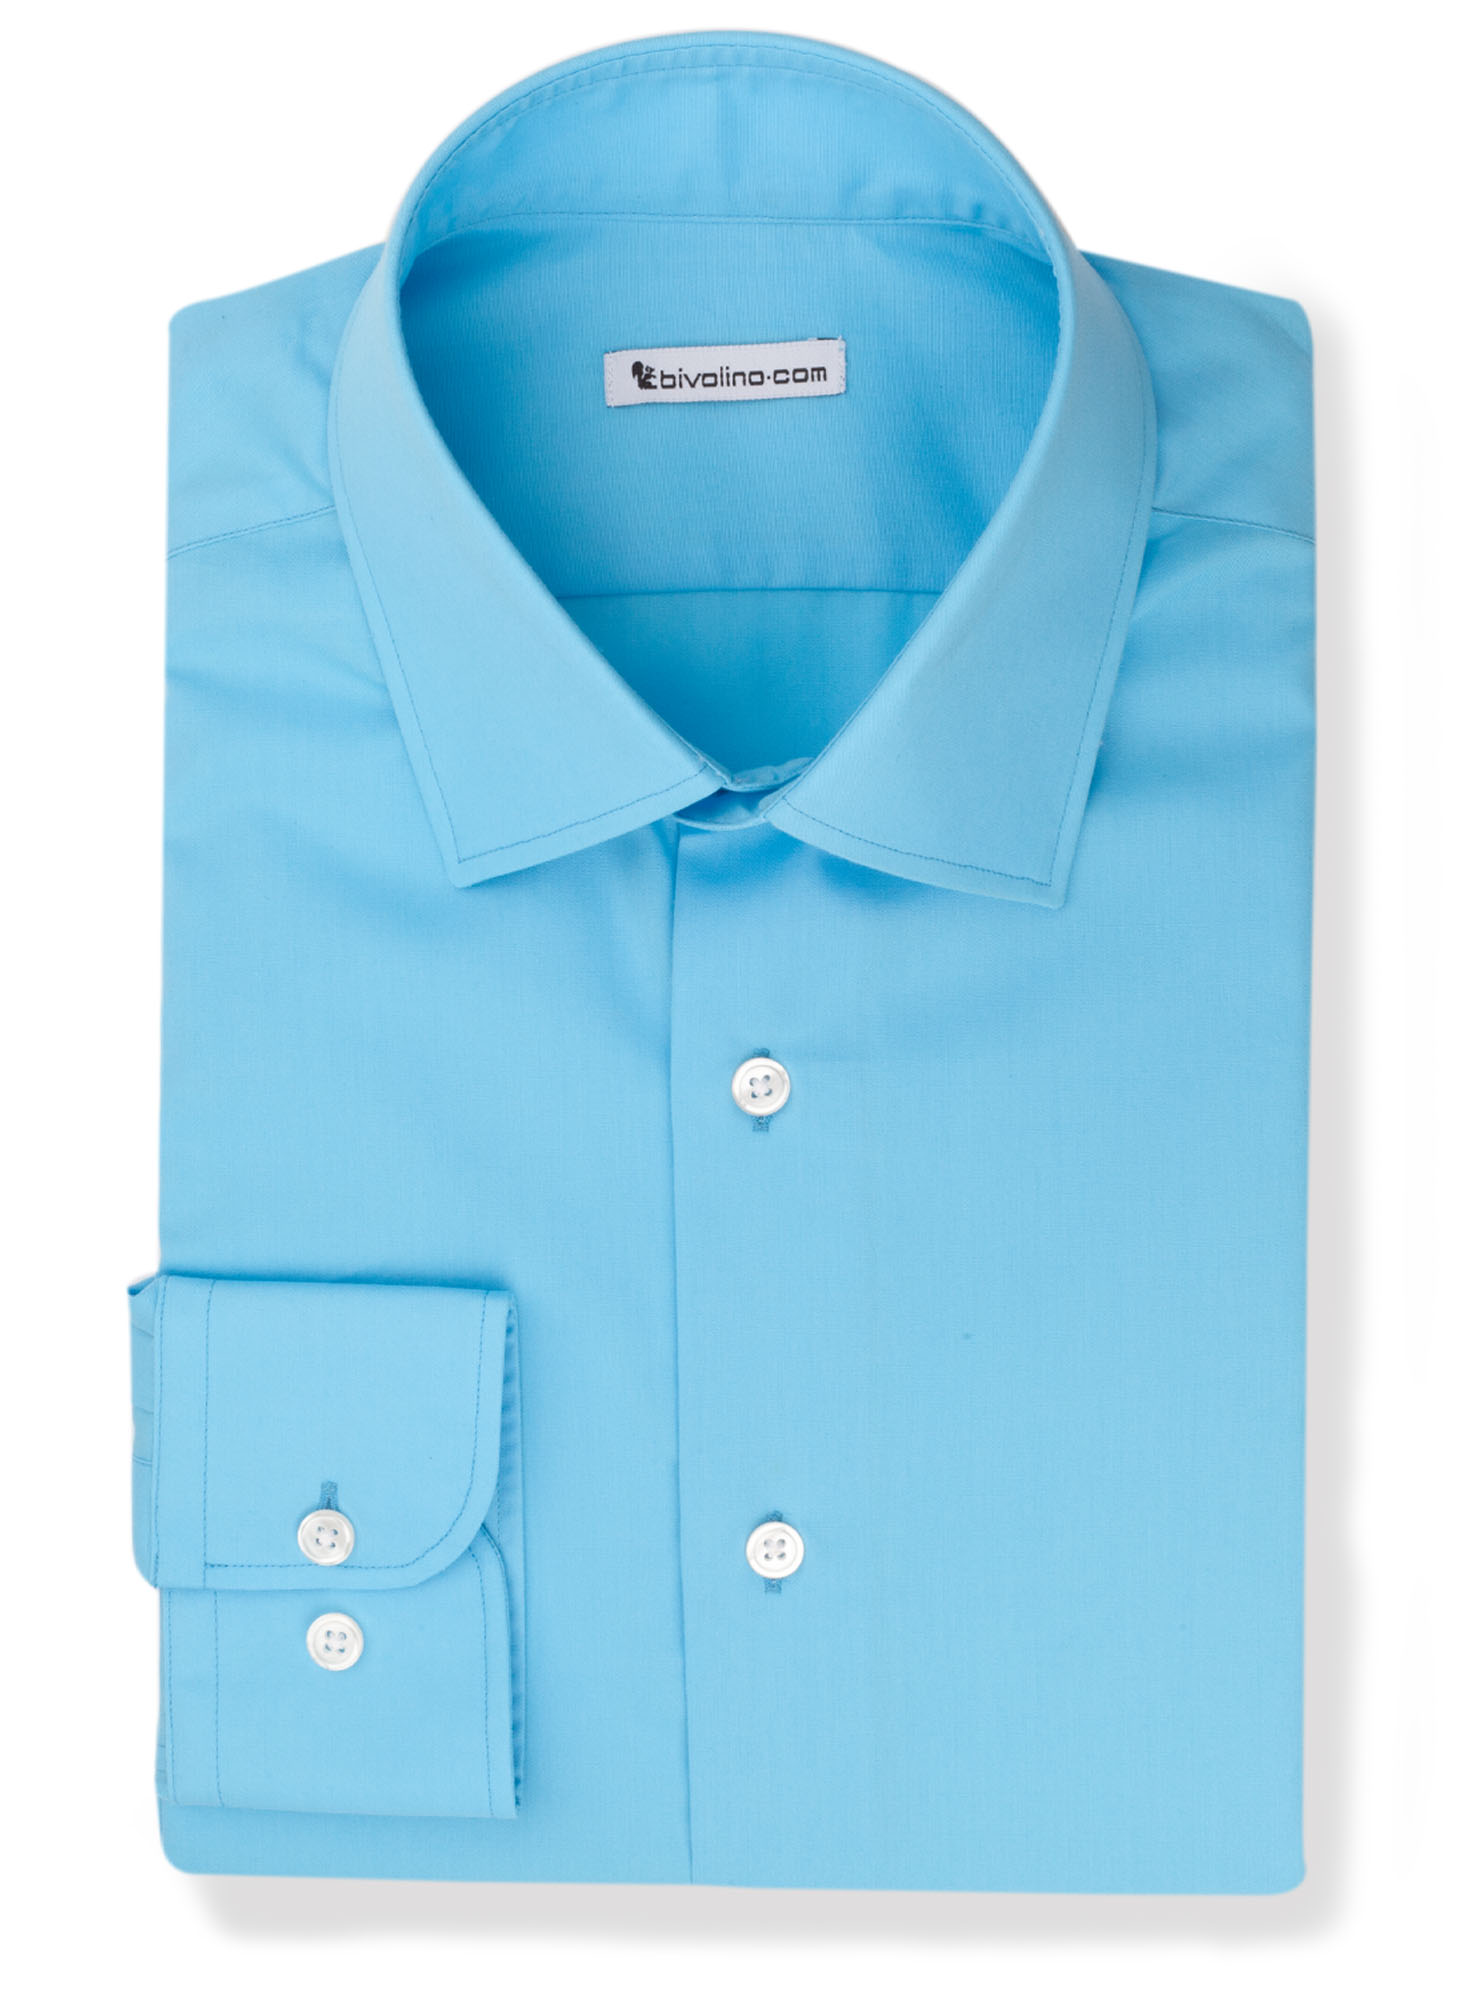 PADOVAA - chemise homme sur mesure turquoise  popeline mix cot-pes - Brise 3